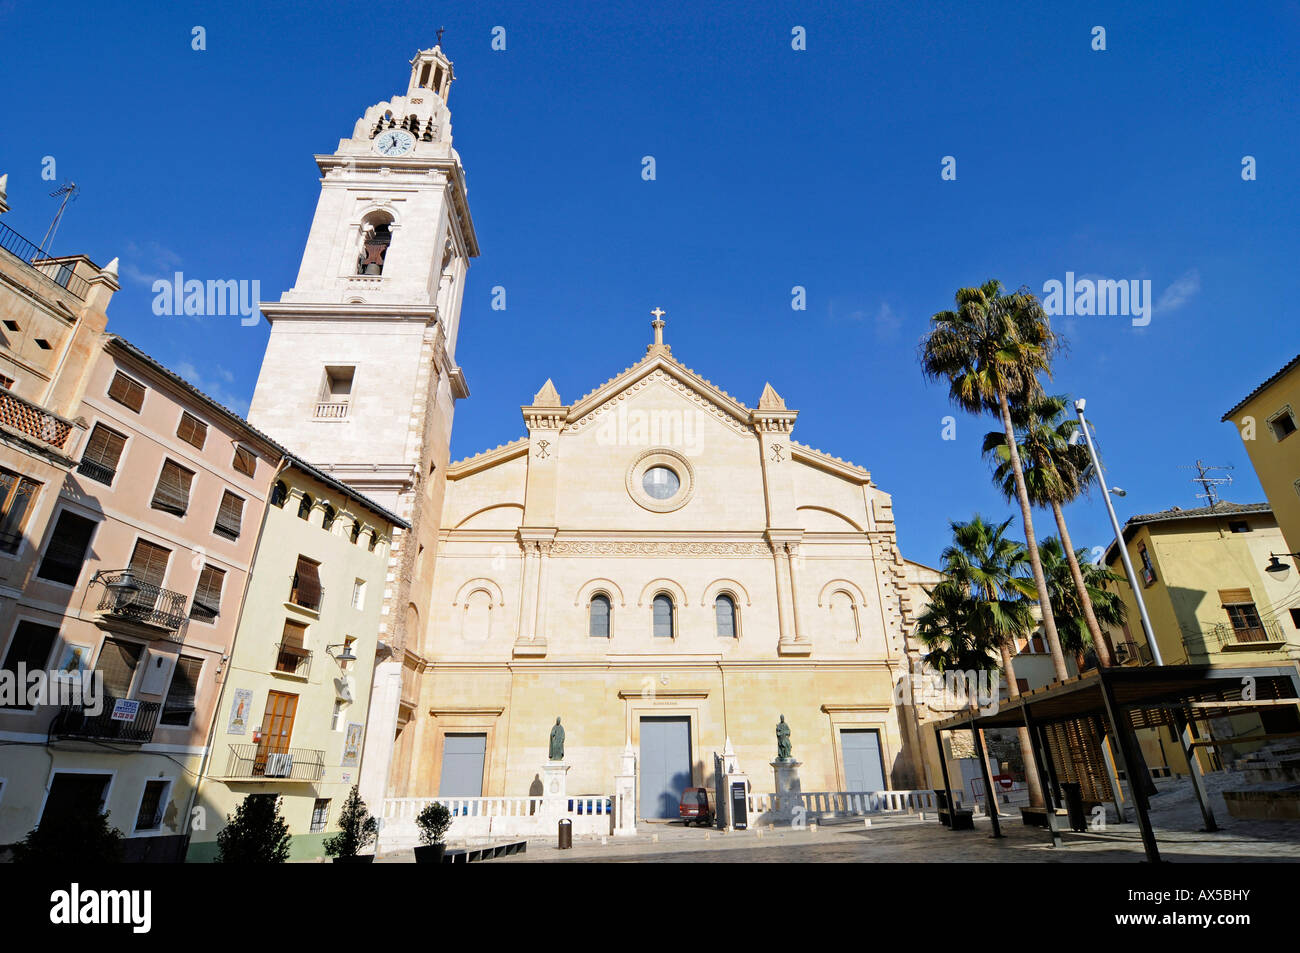 La basilique Sainte-Marie, La Seu Cathedral, Xàtiva (Talk:青州镇 (沙县), Valencia, Espagne, Europe Banque D'Images